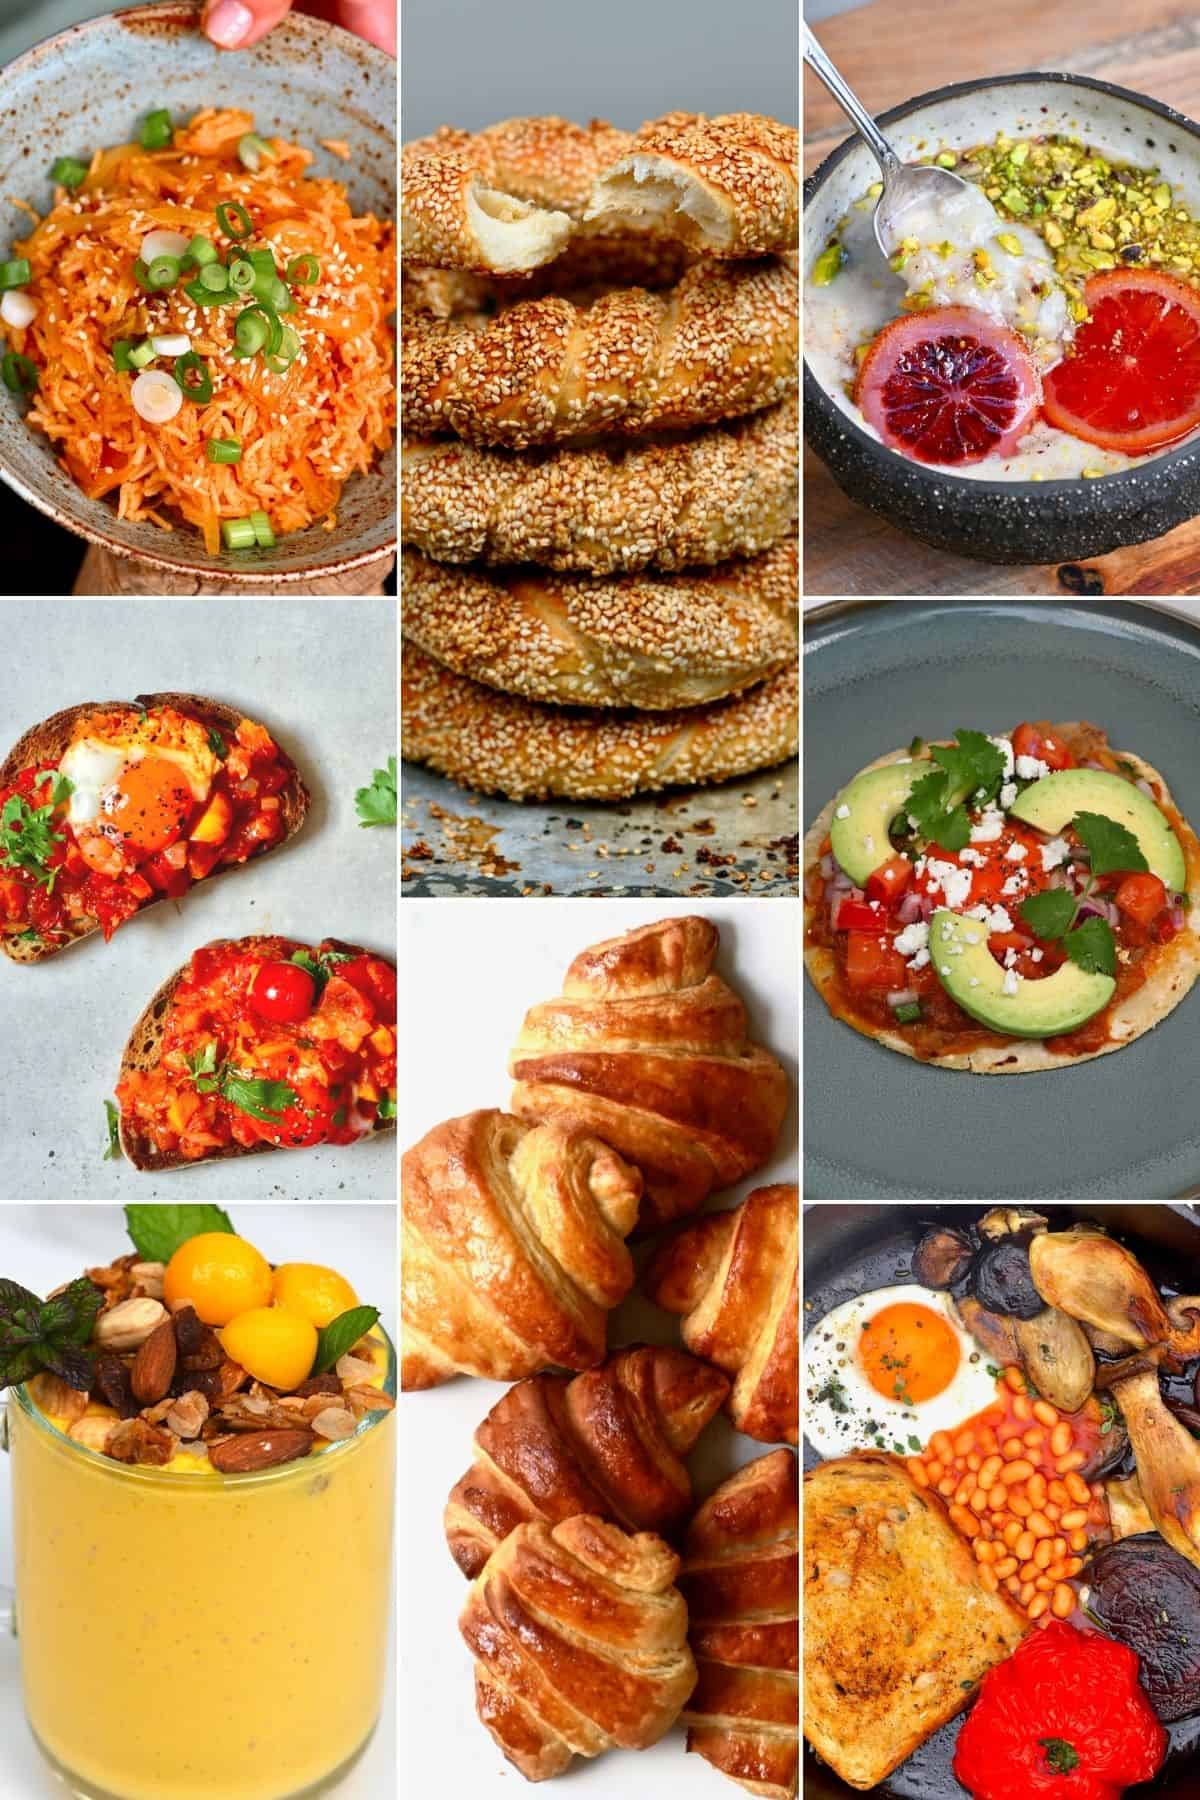 spanish breakfast menu examples